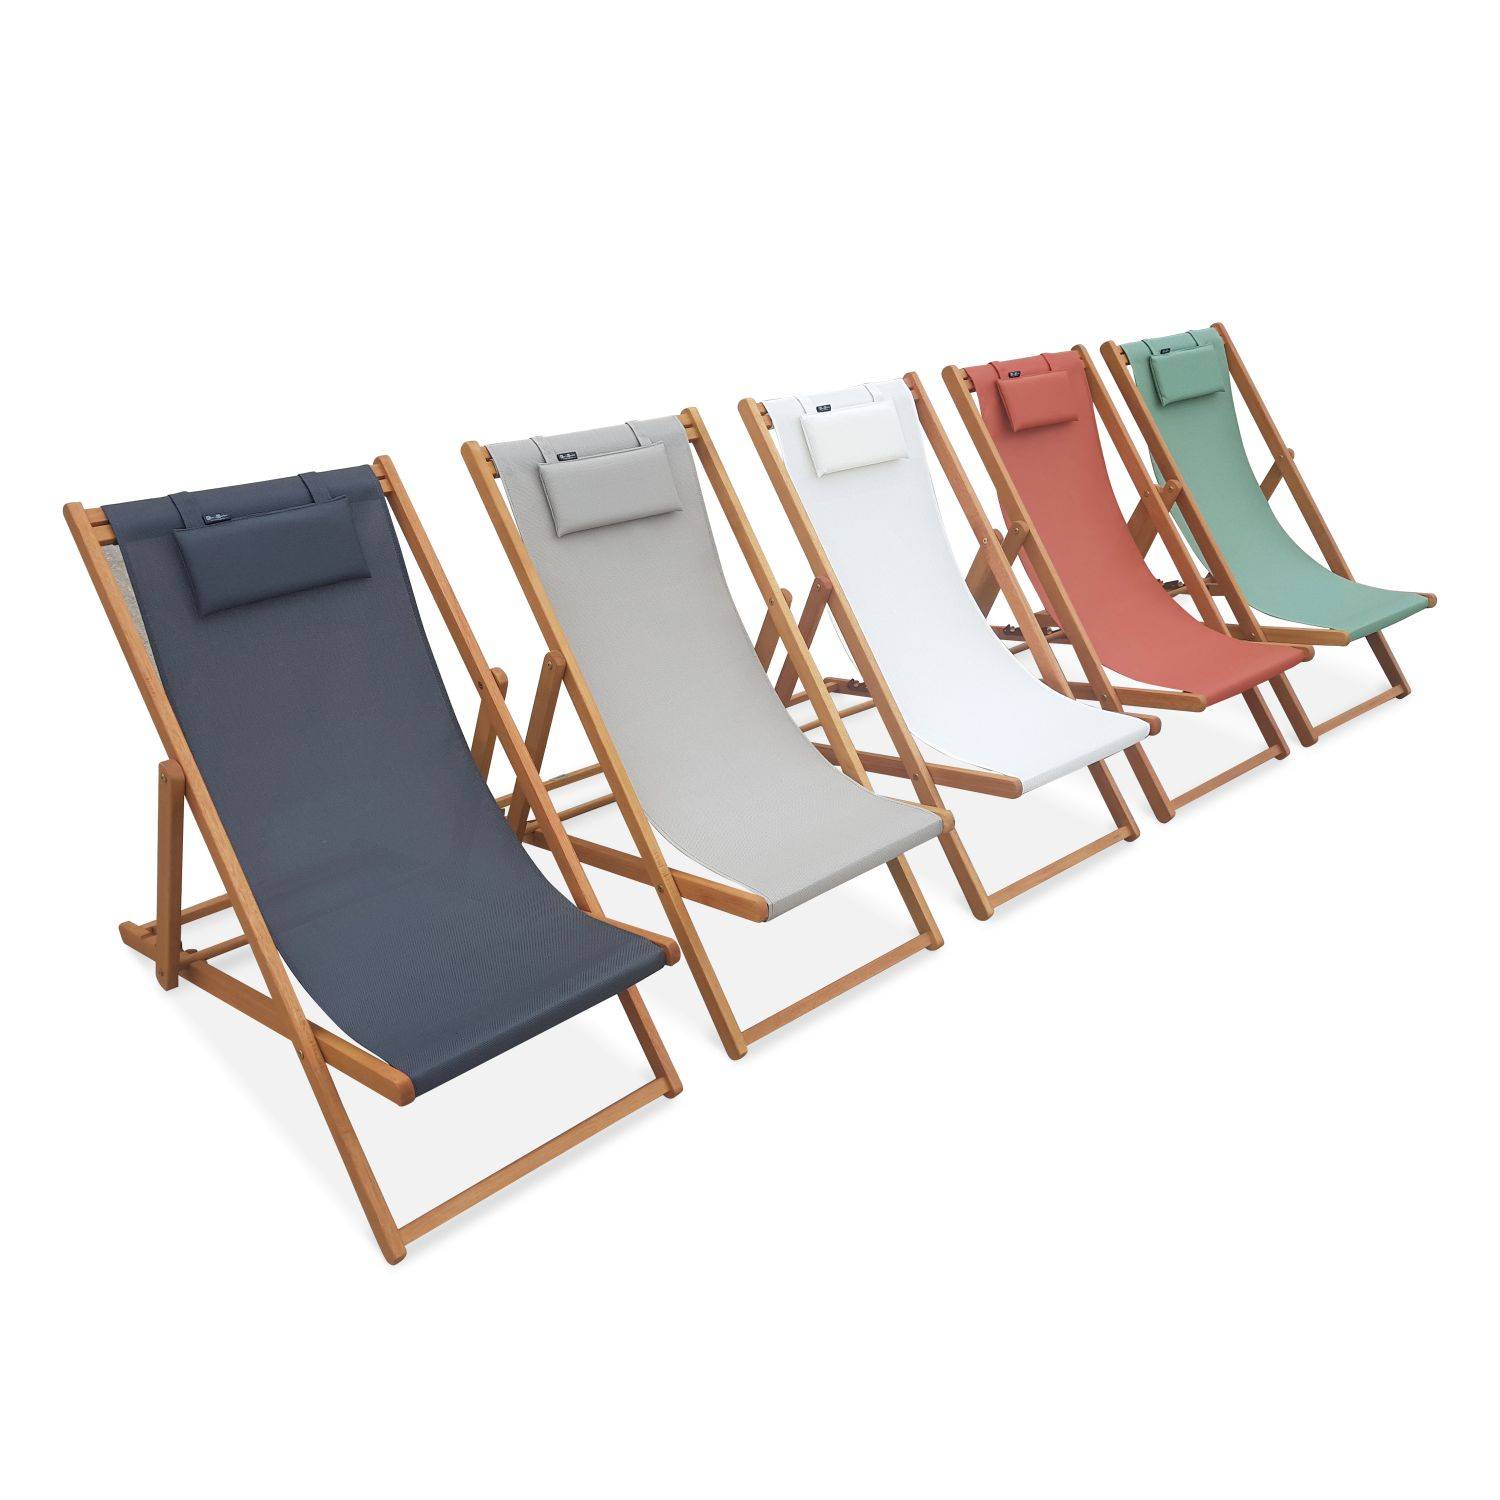 Holzliegestühle - Creus - 2 Liegestühle aus geöltem FSC-Eukalyptus mit graugrünem Kopfstützenkissen Photo5